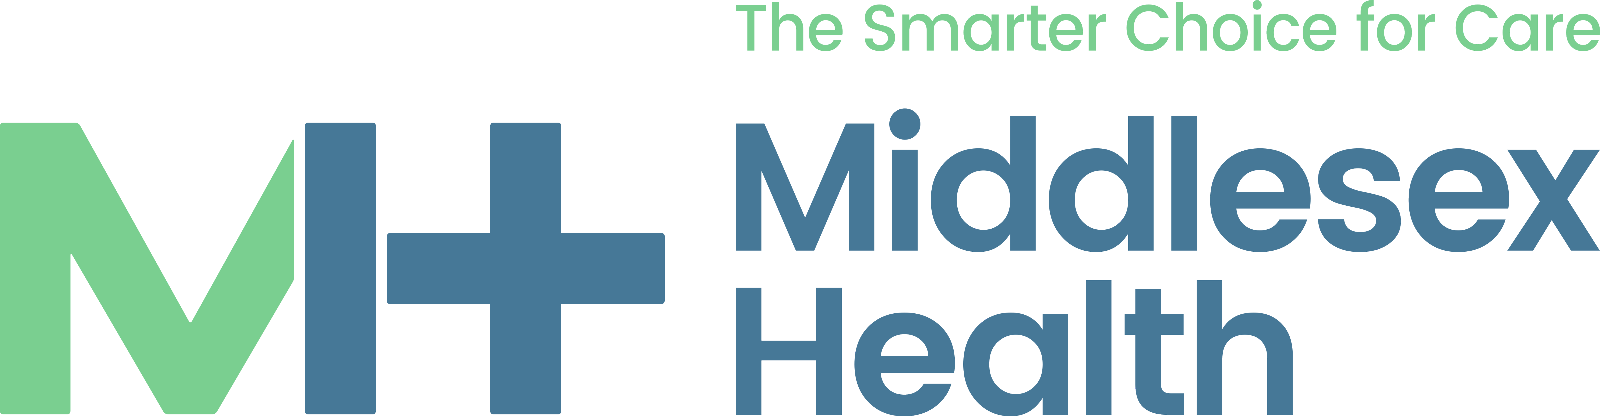 Middlesex Health